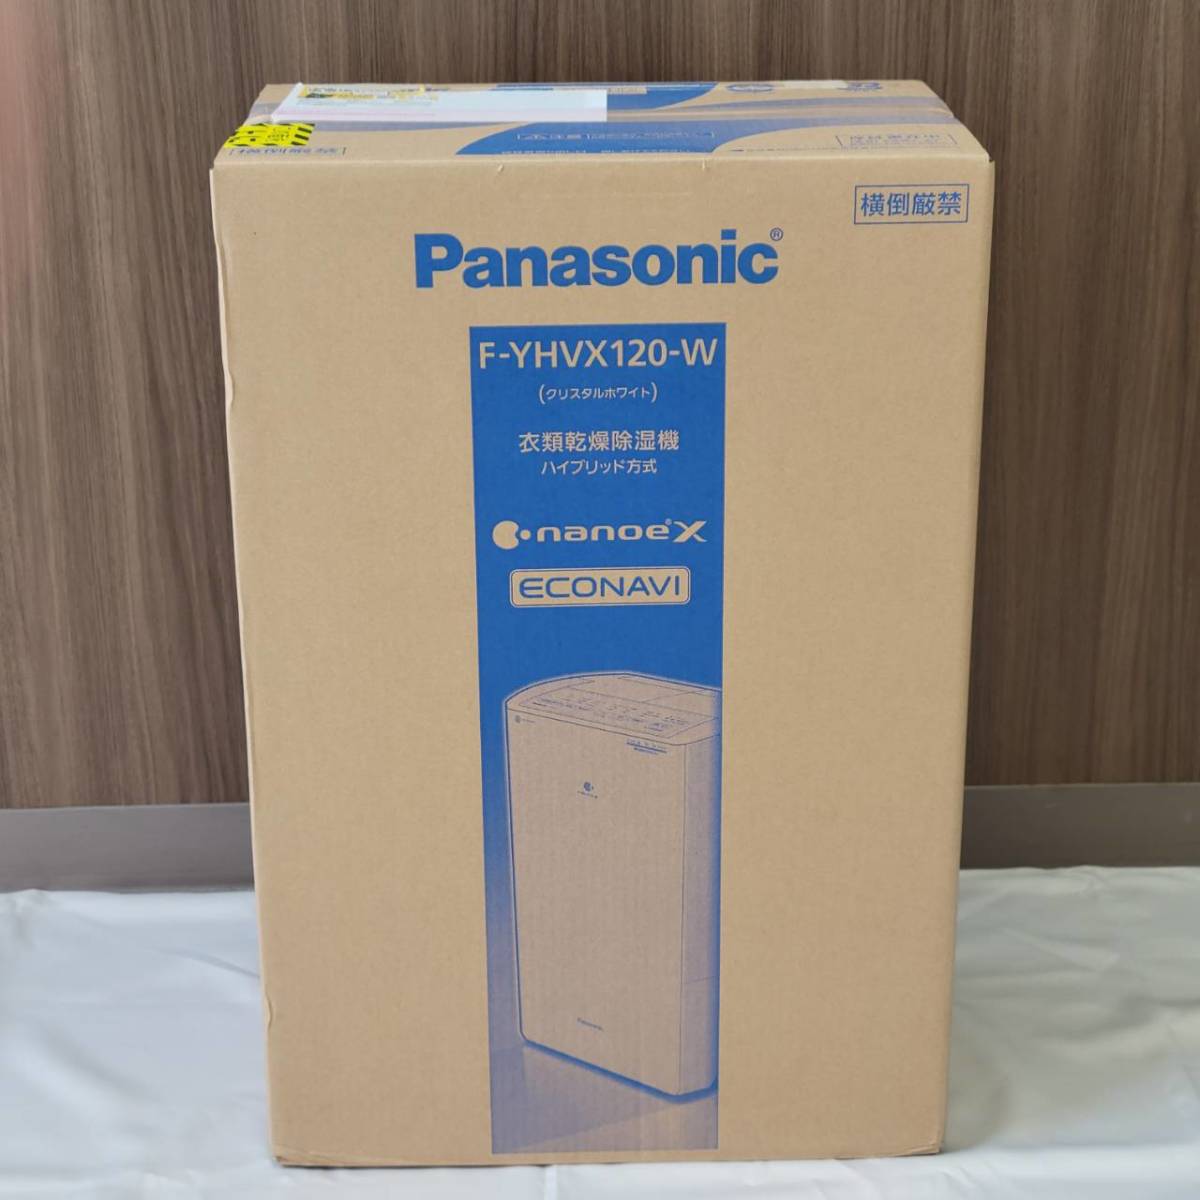 【YH-6192】新品未開封 Panasonic パナソニック F-YHVX120-W 衣類乾燥除湿機 ハイブリッド方式 ナノイーX ECONAVI